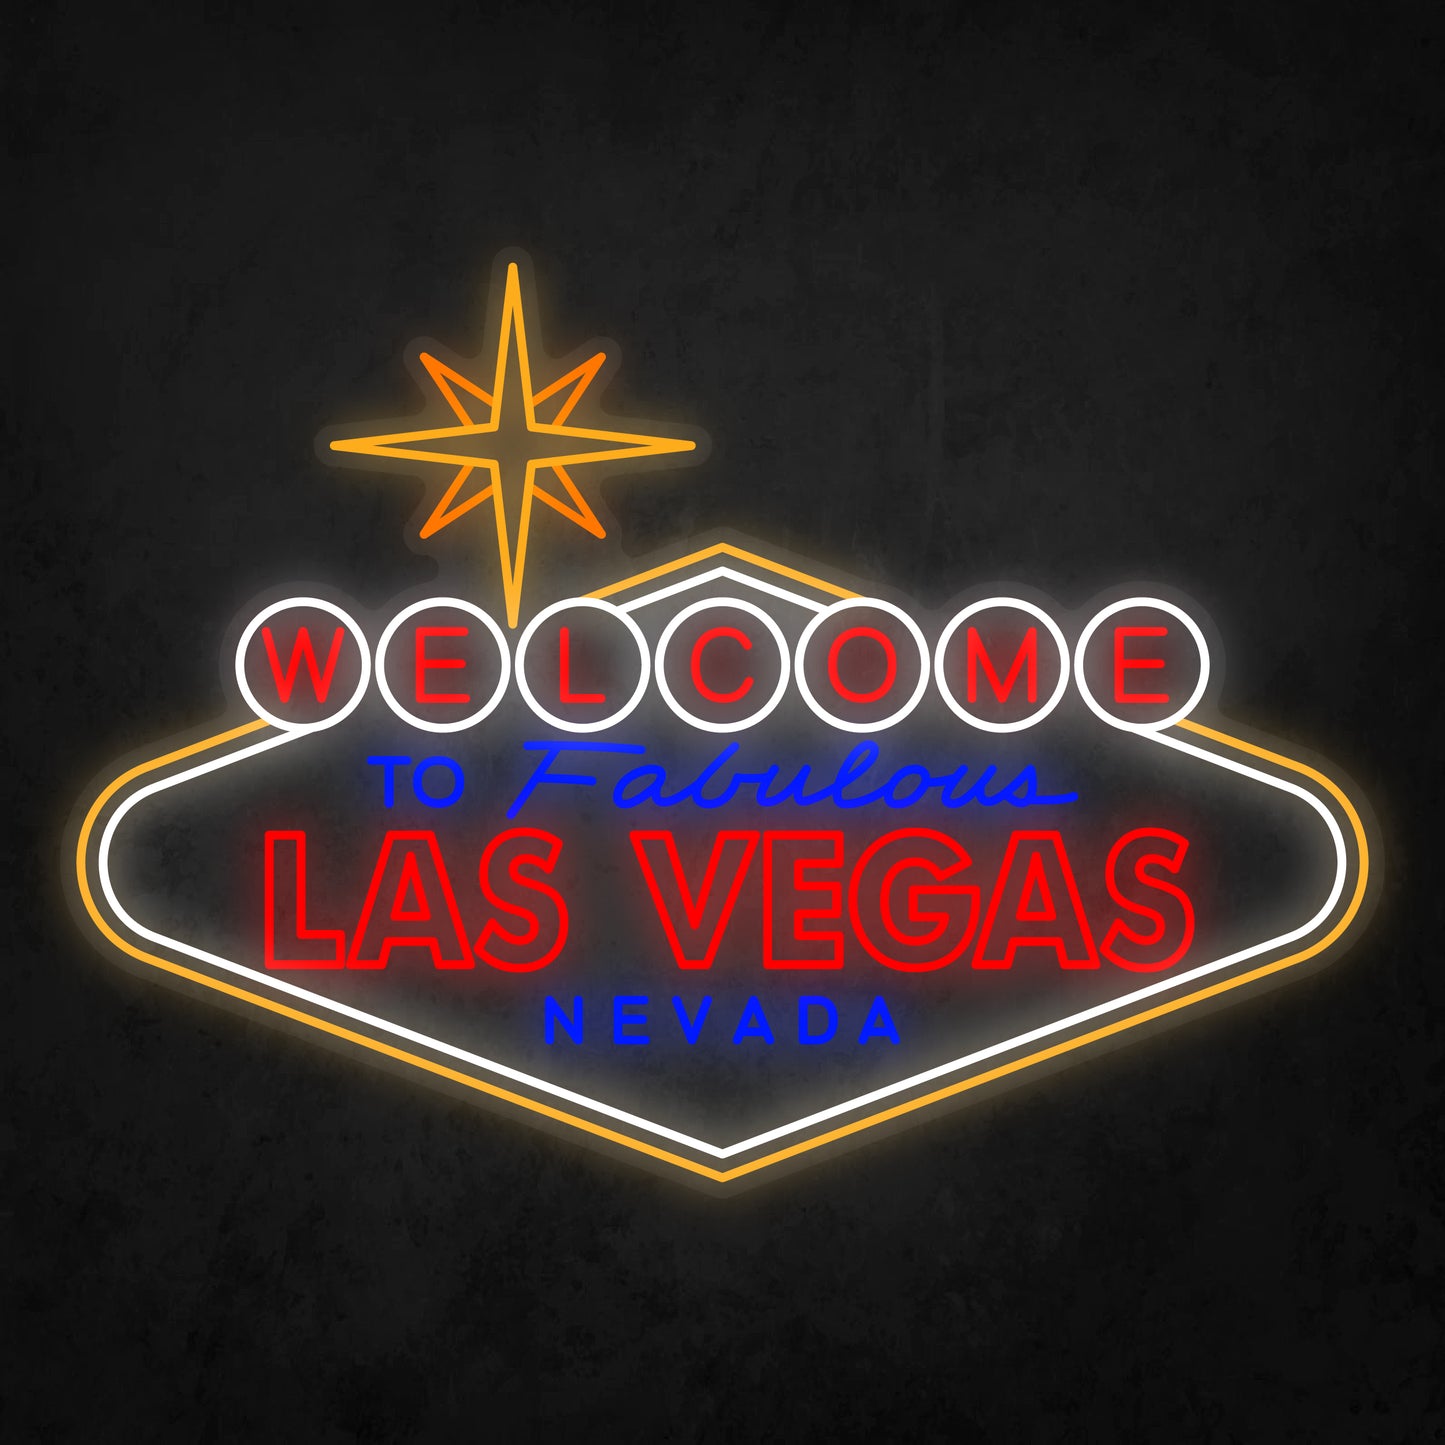 LED Neon Sign - Las Vegas